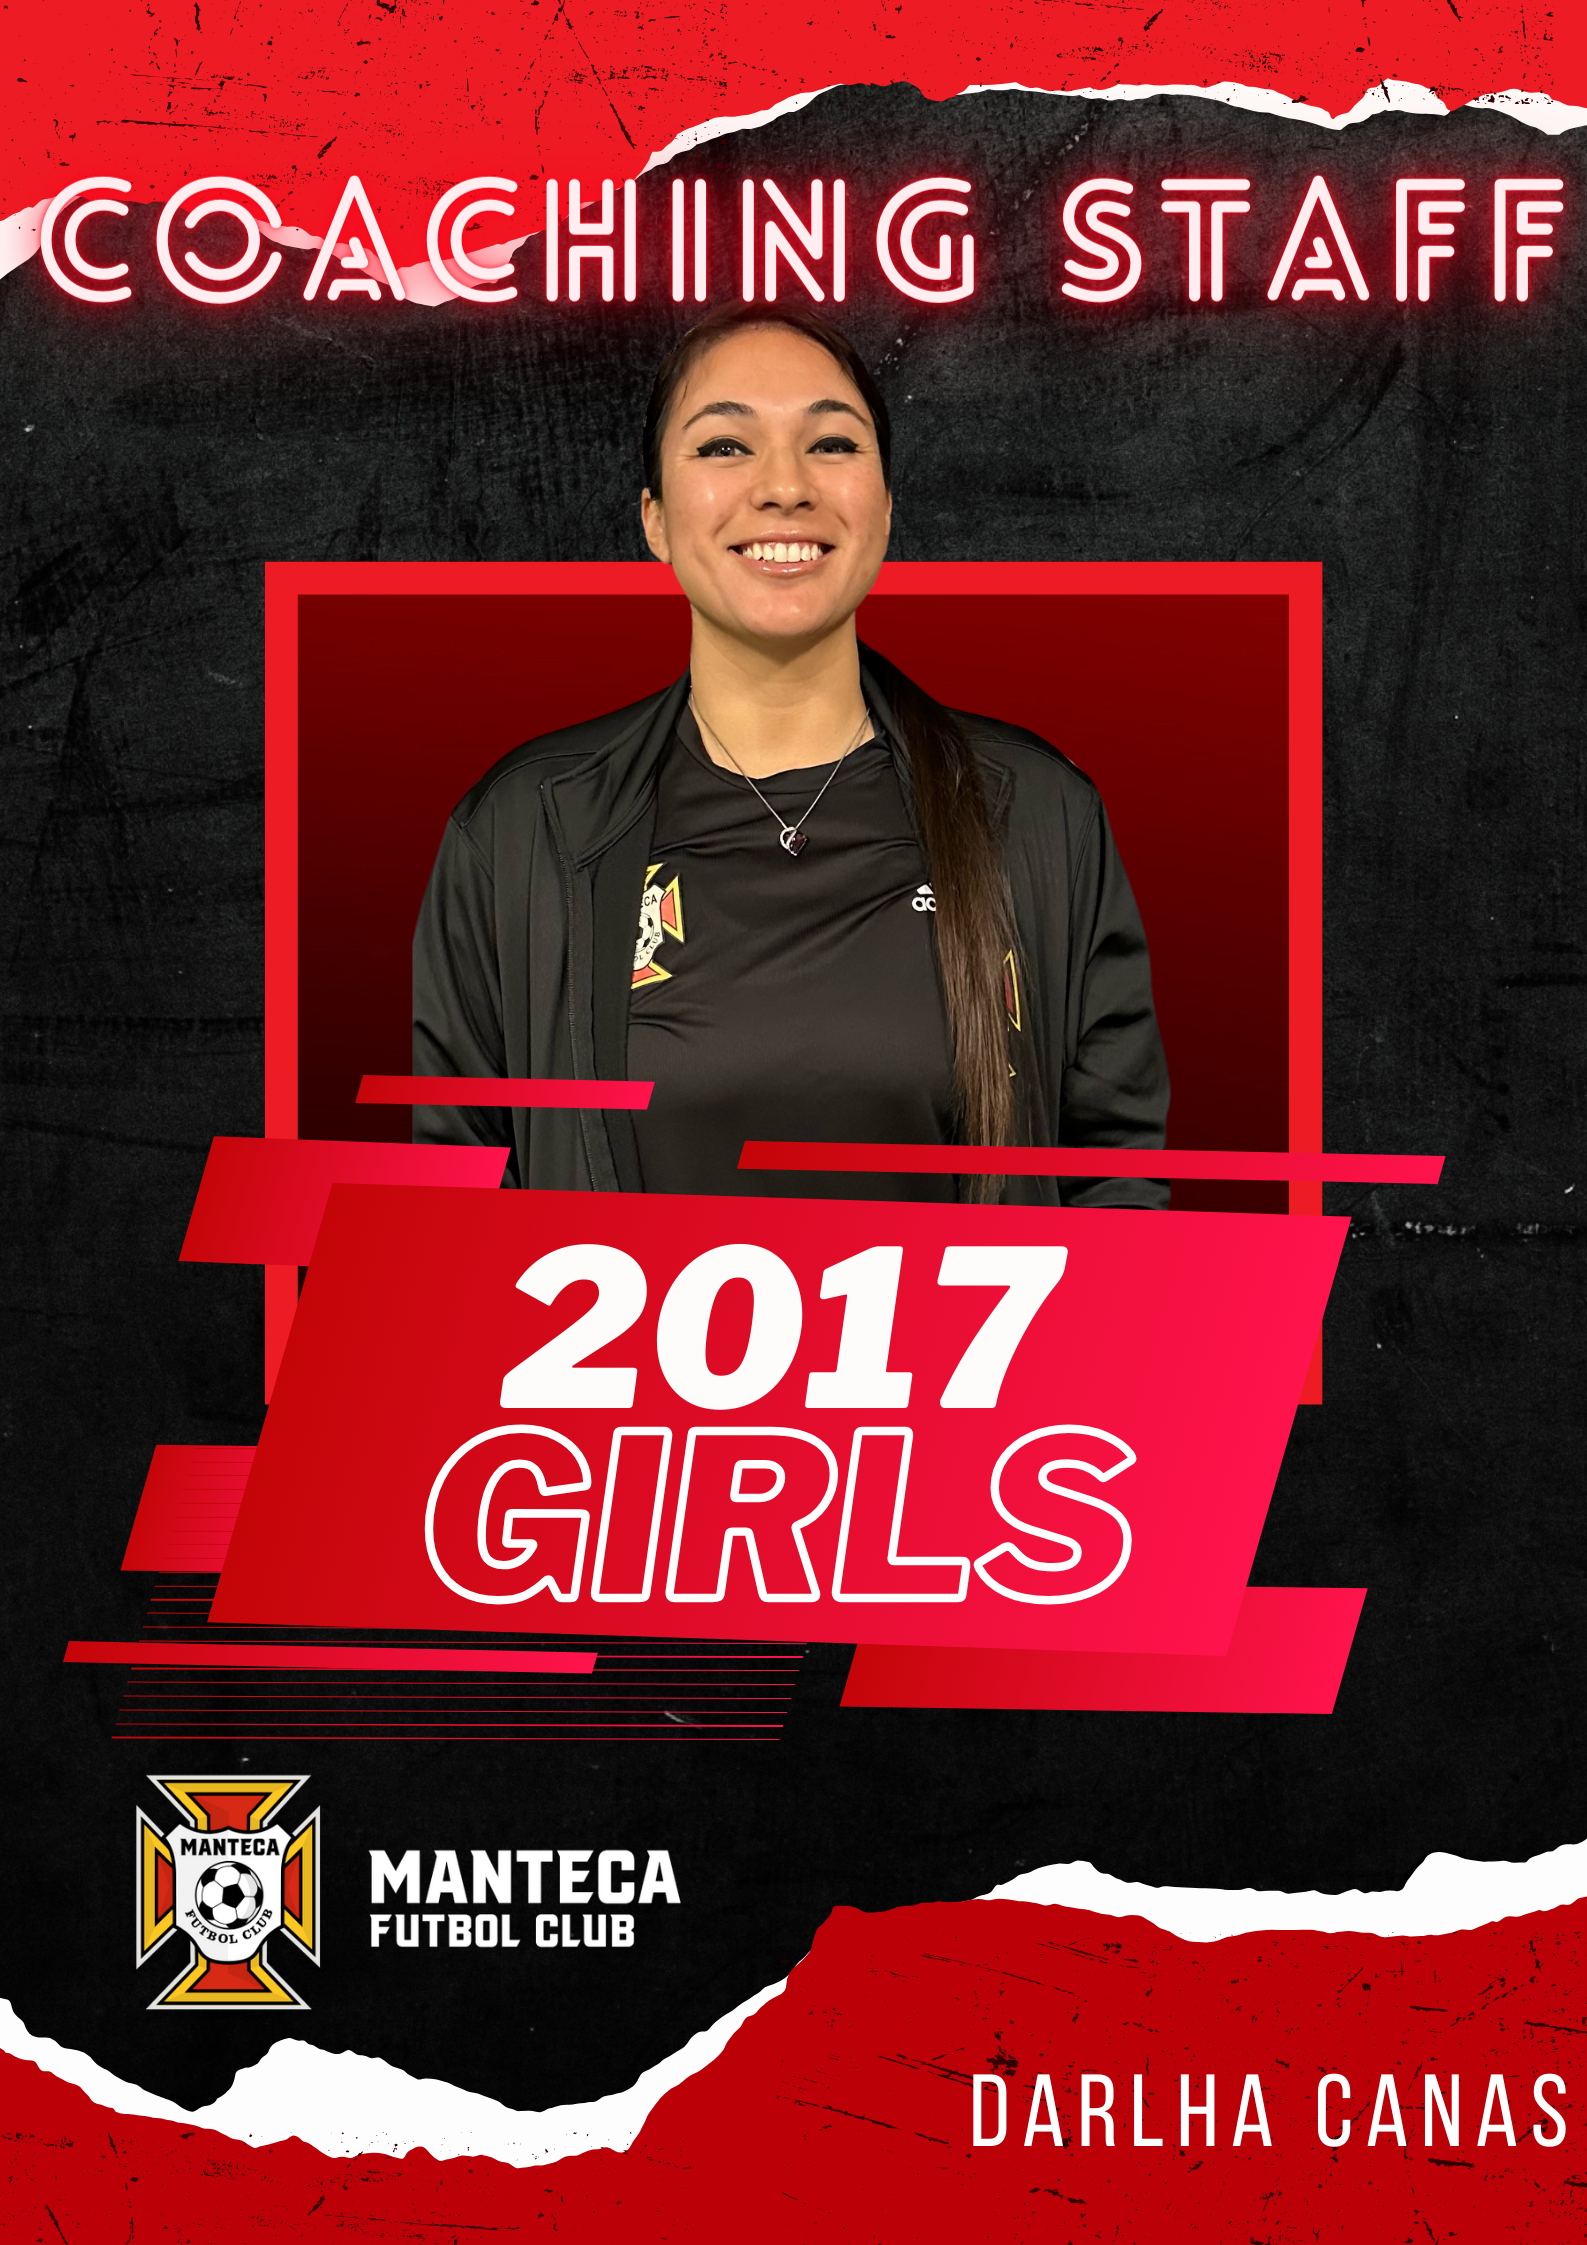 Manteca Futbol Club 2017 Girls